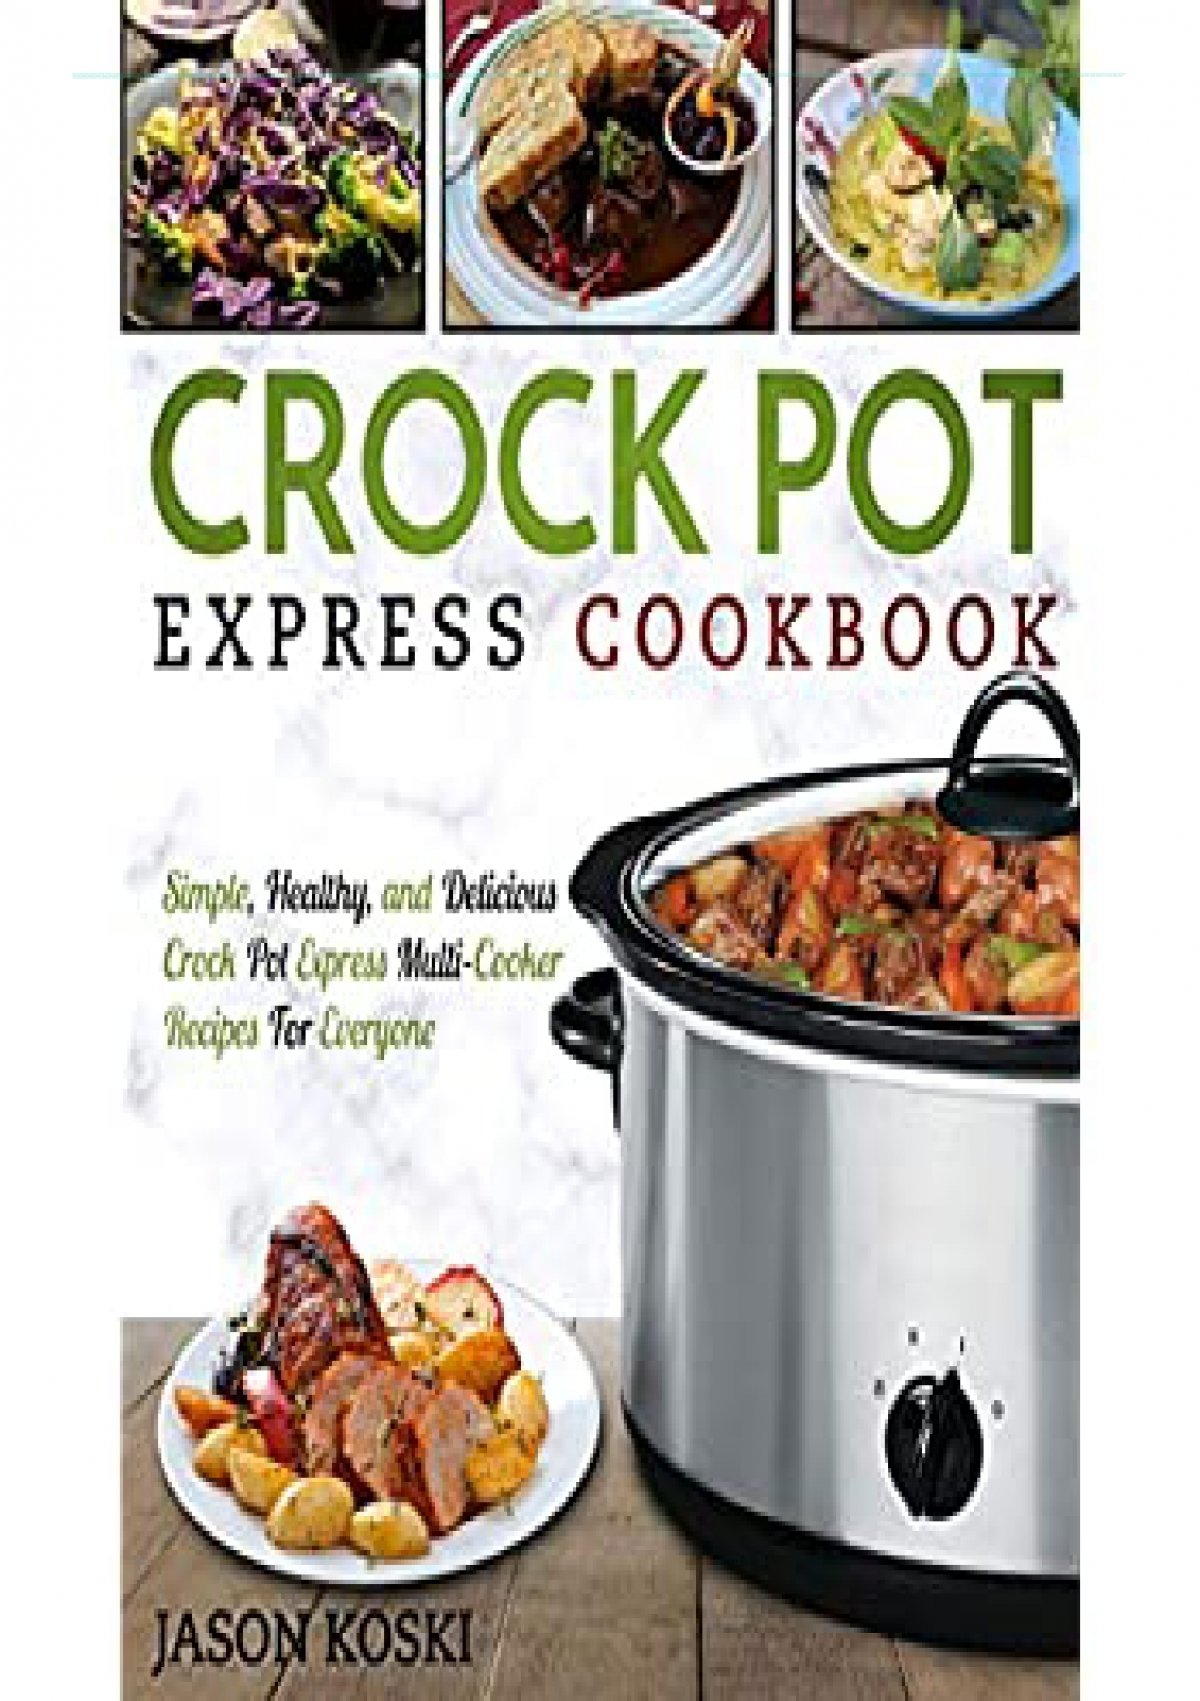 Pdf Crock Pot Express Cookbook Simple Healthy And Delicious Crock Pot Express Multi Cooker